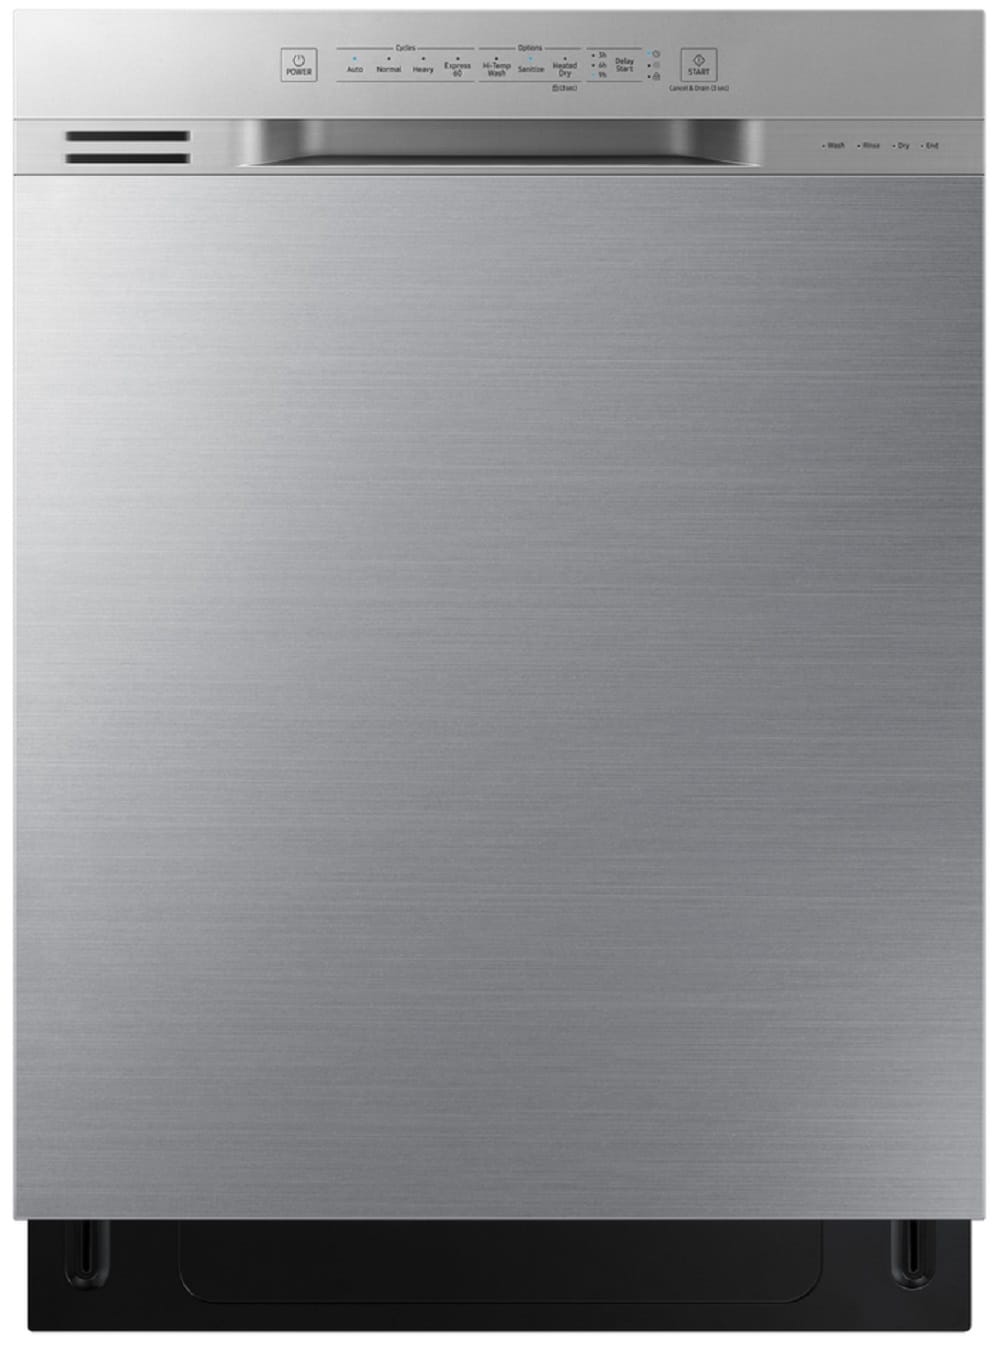 Samsung DW80K7050US - Dishwasher - built-in - Niche - width: 24 in - depth:  24 in - height: 34.1 in - stainless steel 